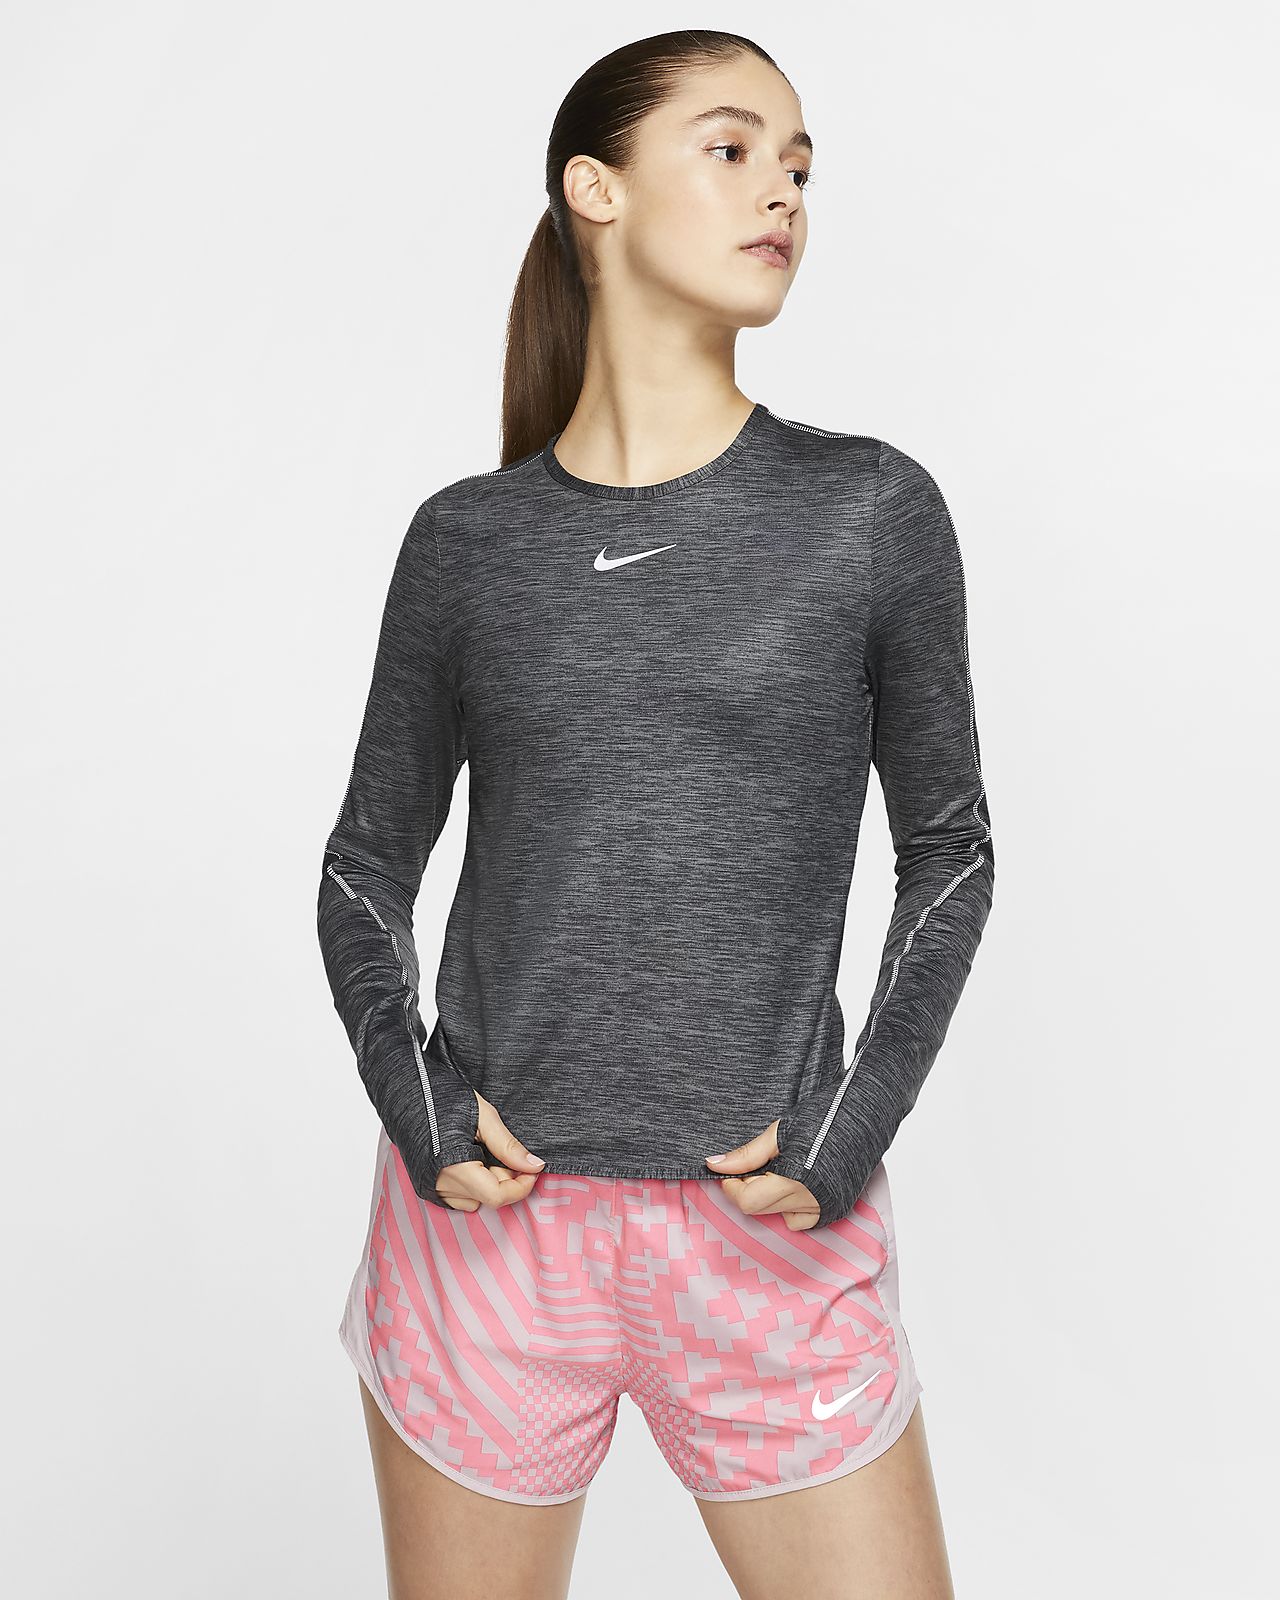 Long-Sleeve Running Top. Nike CH